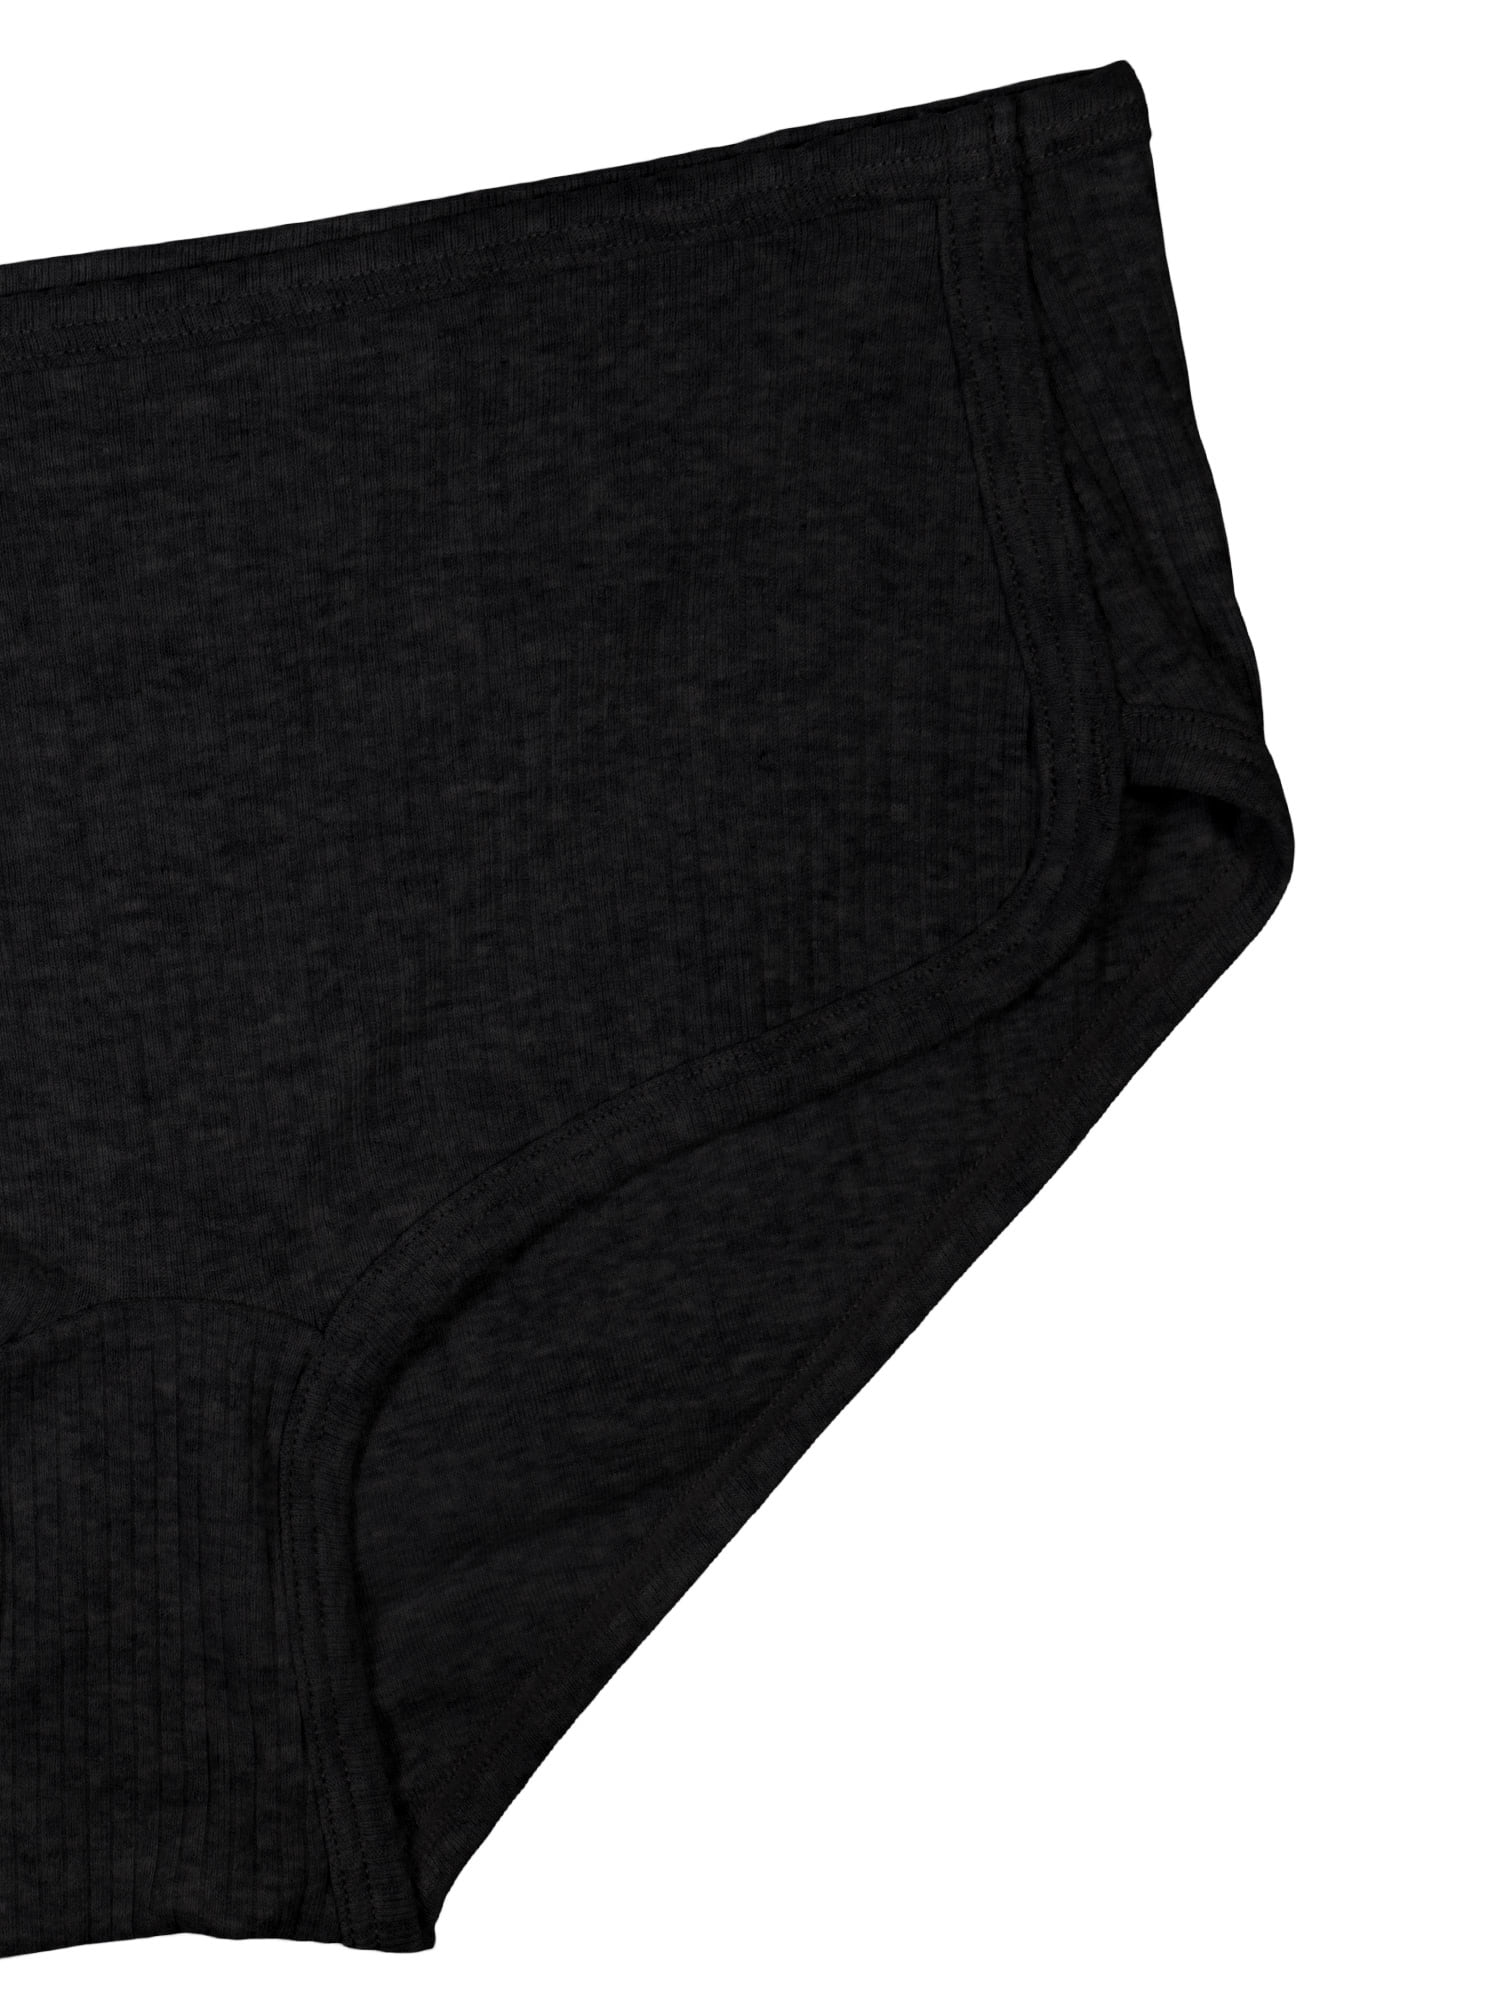 Smart & Sexy Comfort Cotton Rib Tank Top & Shorts Sleep Set Navy Highlight  L : Target